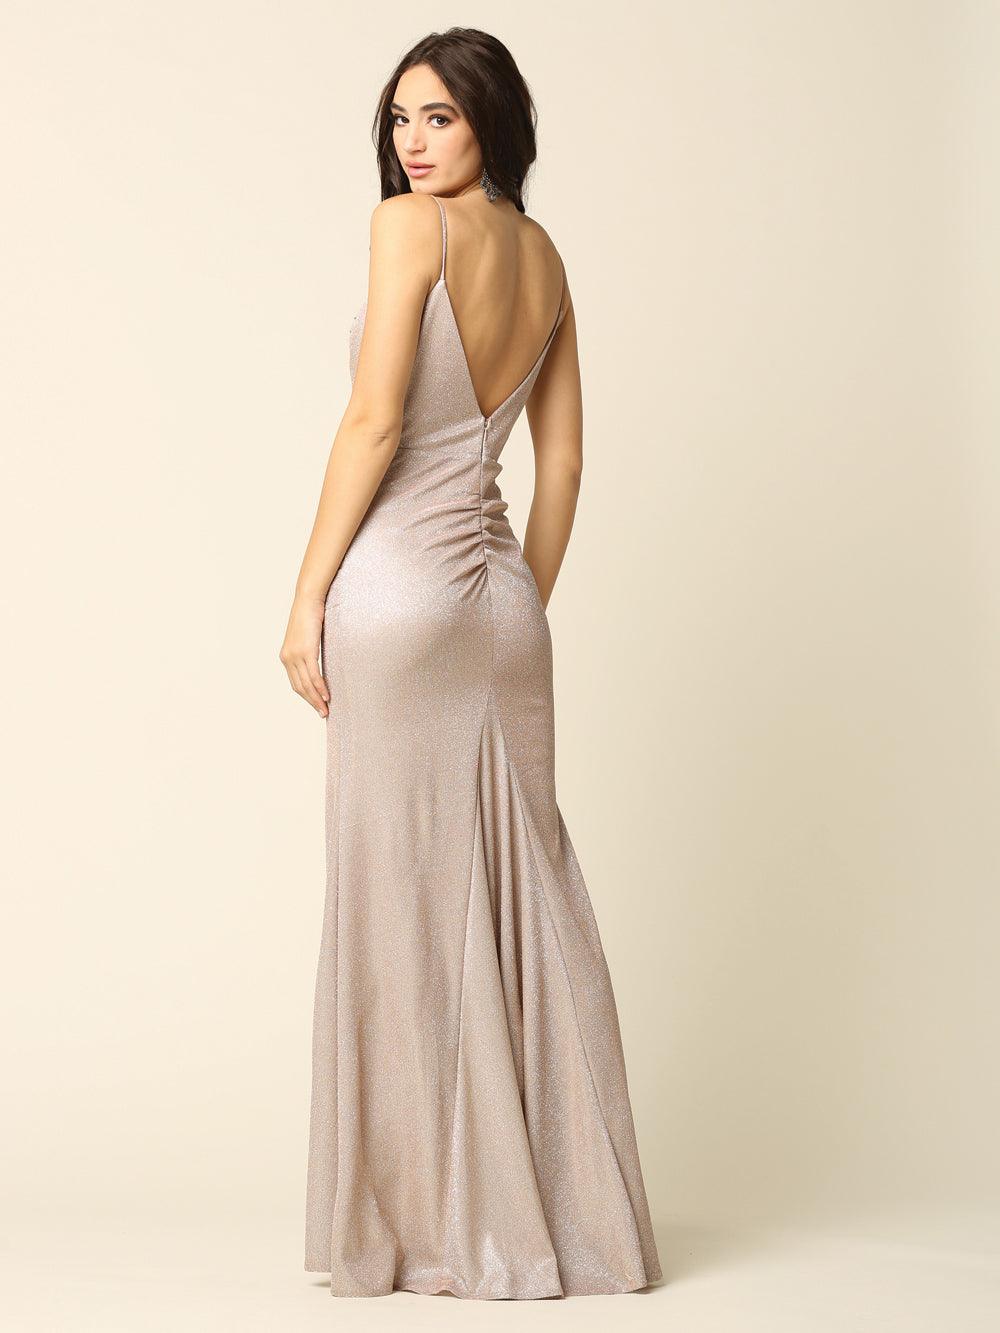 Long Formal Spaghetti Strap Glitter Prom Dress - The Dress Outlet